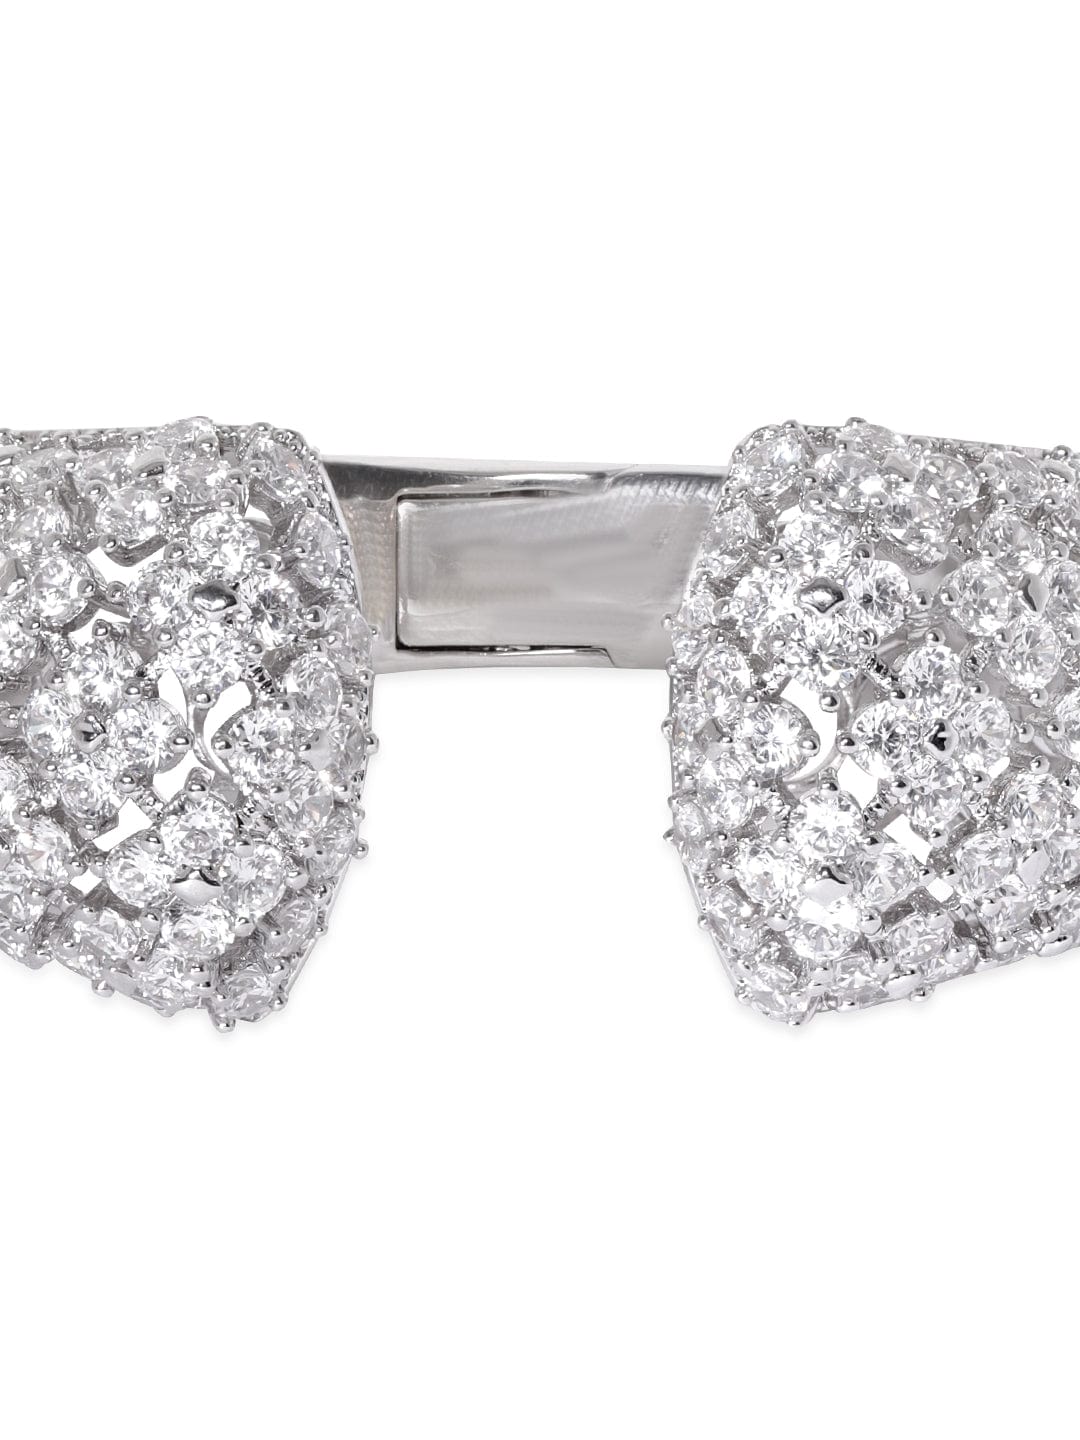 Rubans Serenity in Luxury AD's Elegant Bracelet Masterpieces Bangles & Bracelets